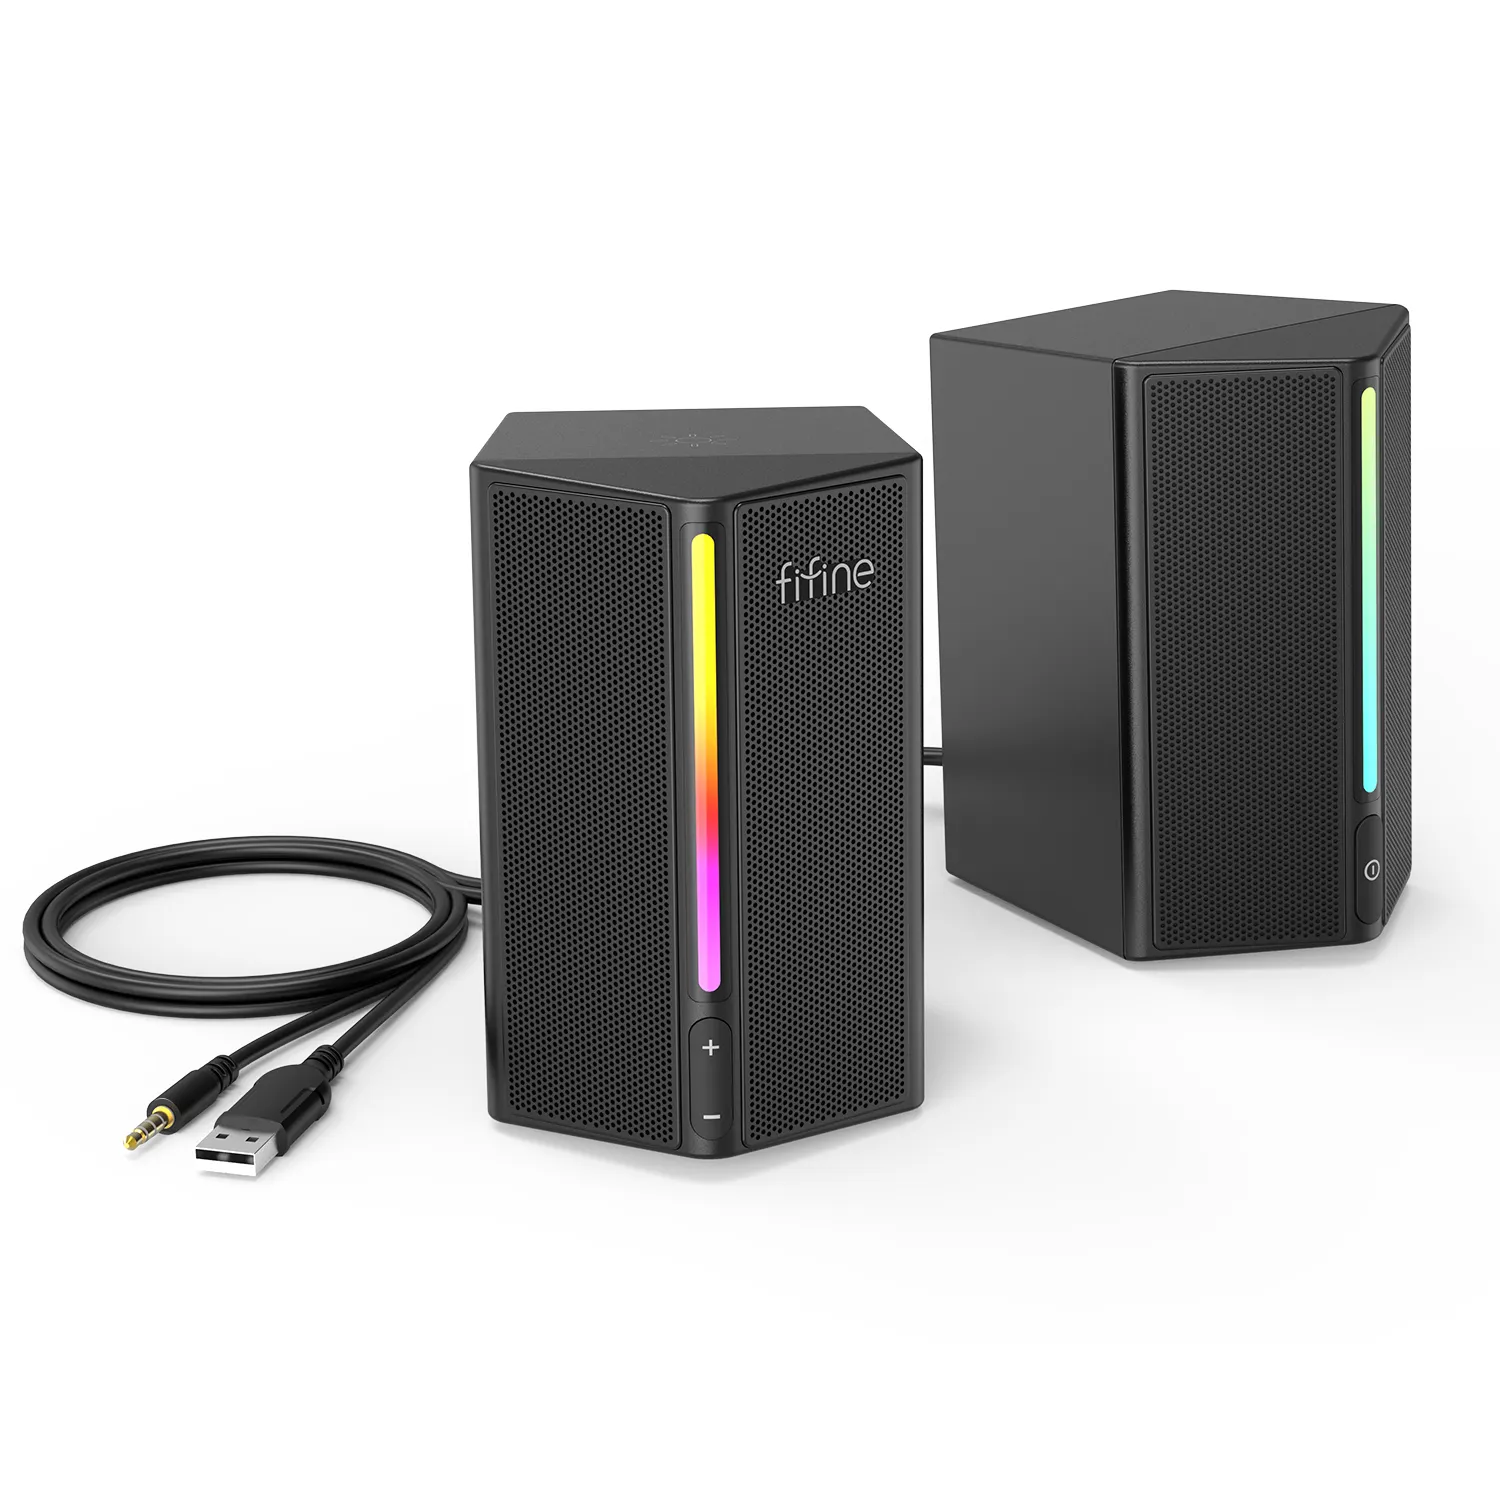 Fifine amplipame RGB luce portatile speaker2.0WiredABSDesktop Mini altoparlante per gioco 3.5mmusbstereo